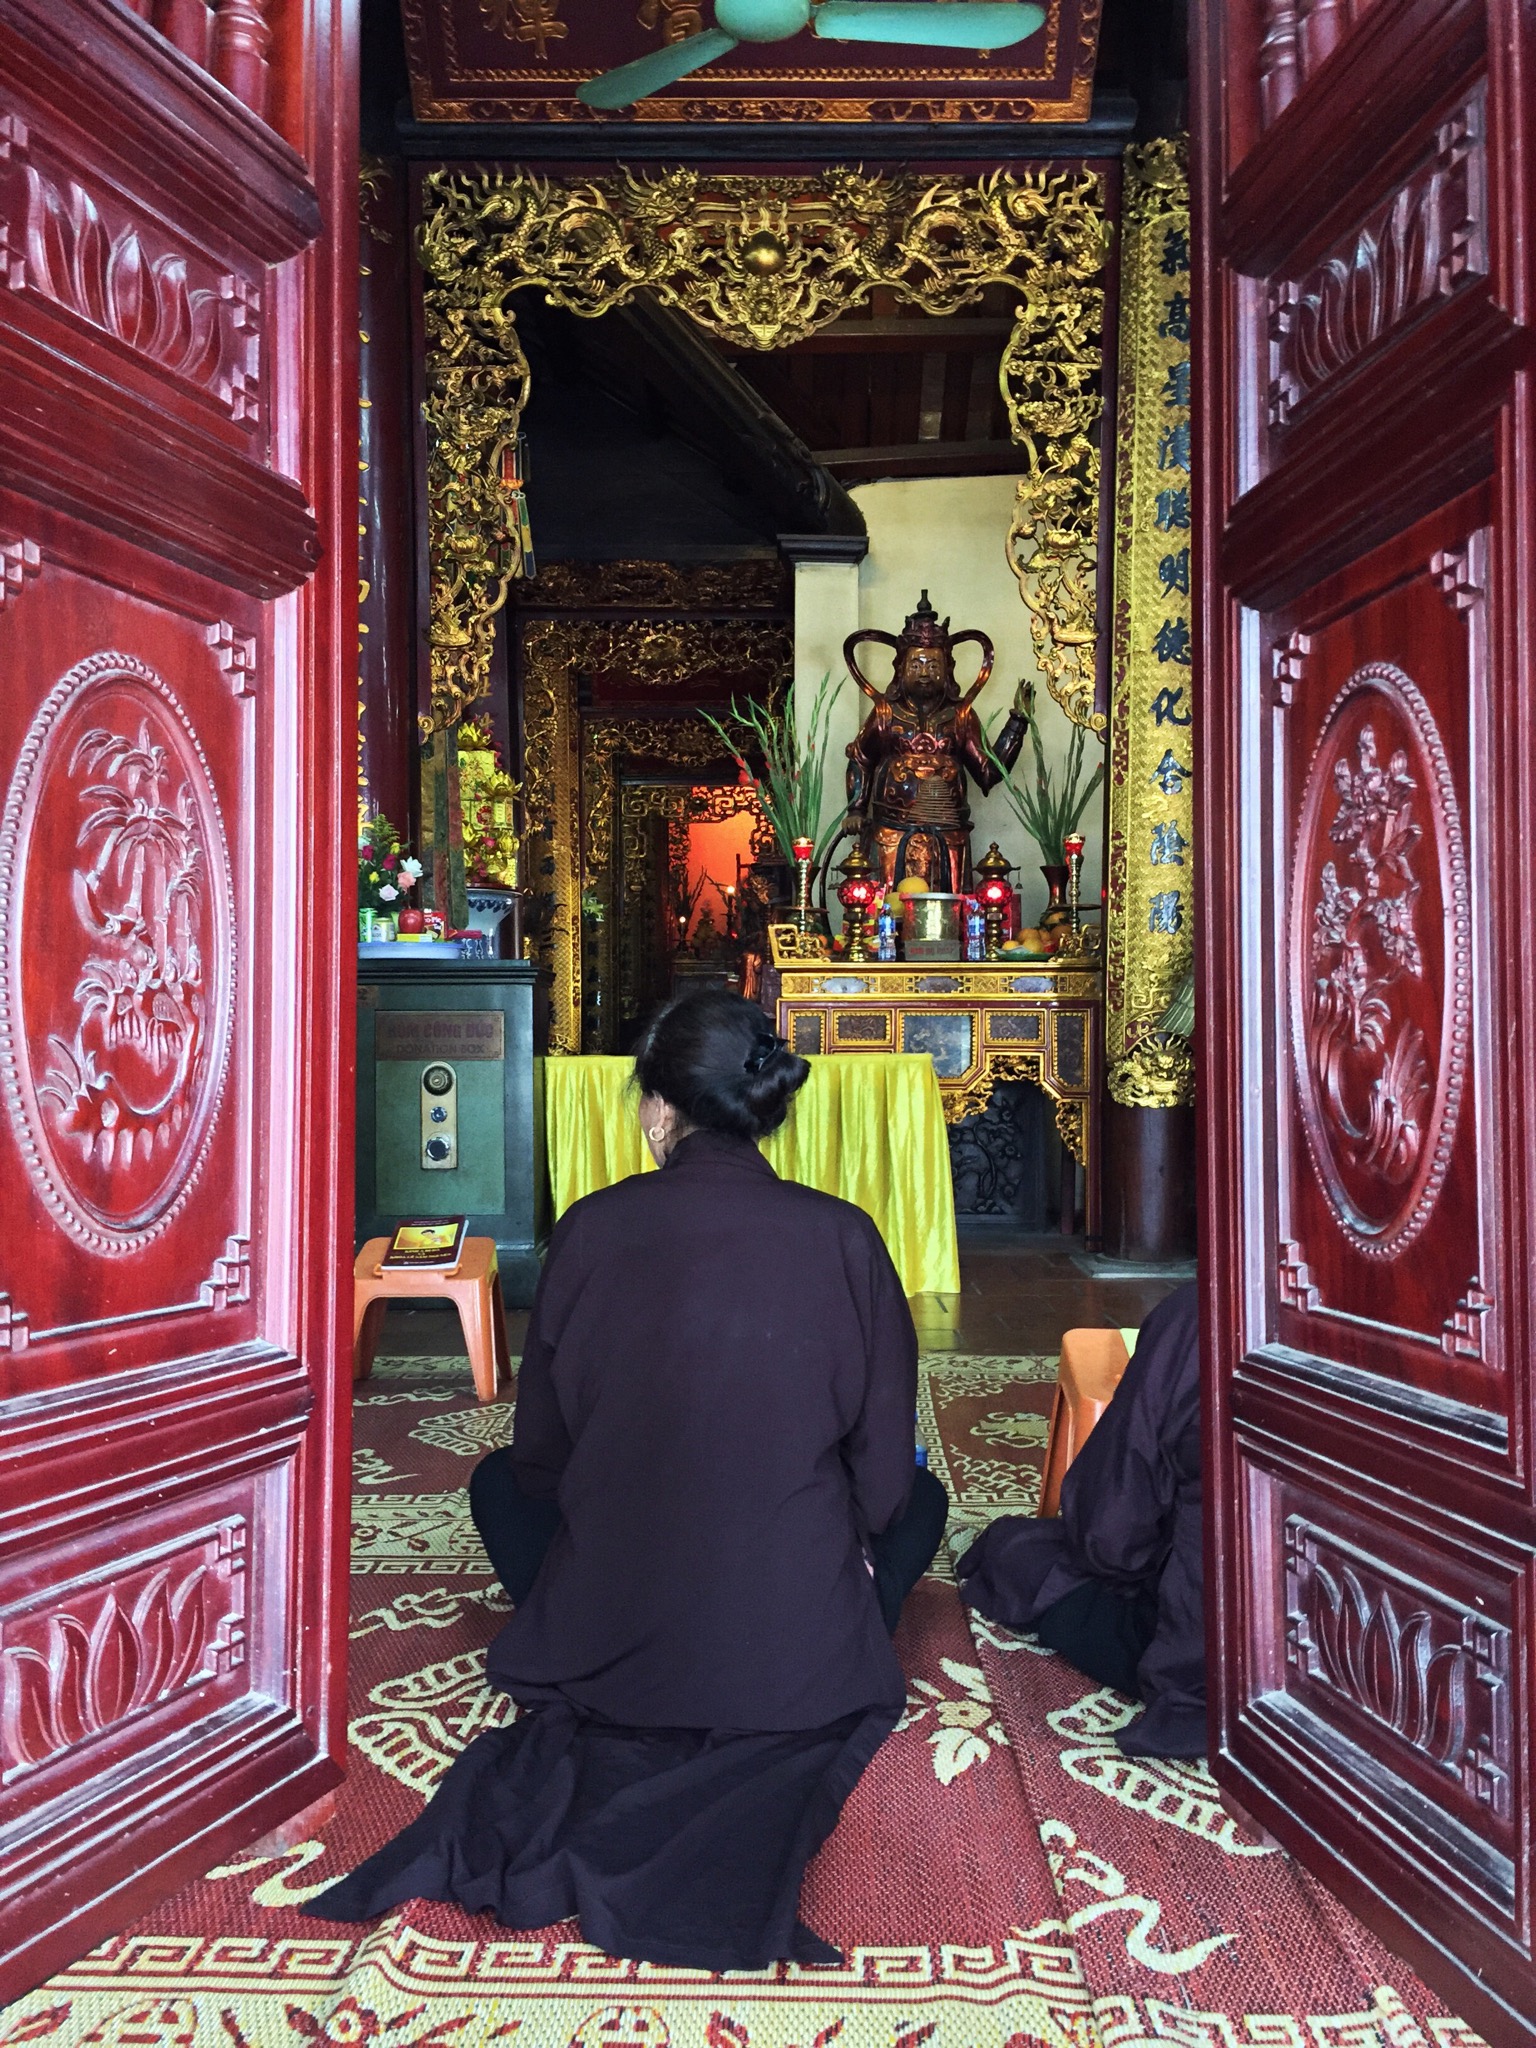 Tran-quoc-pagoda-celebration